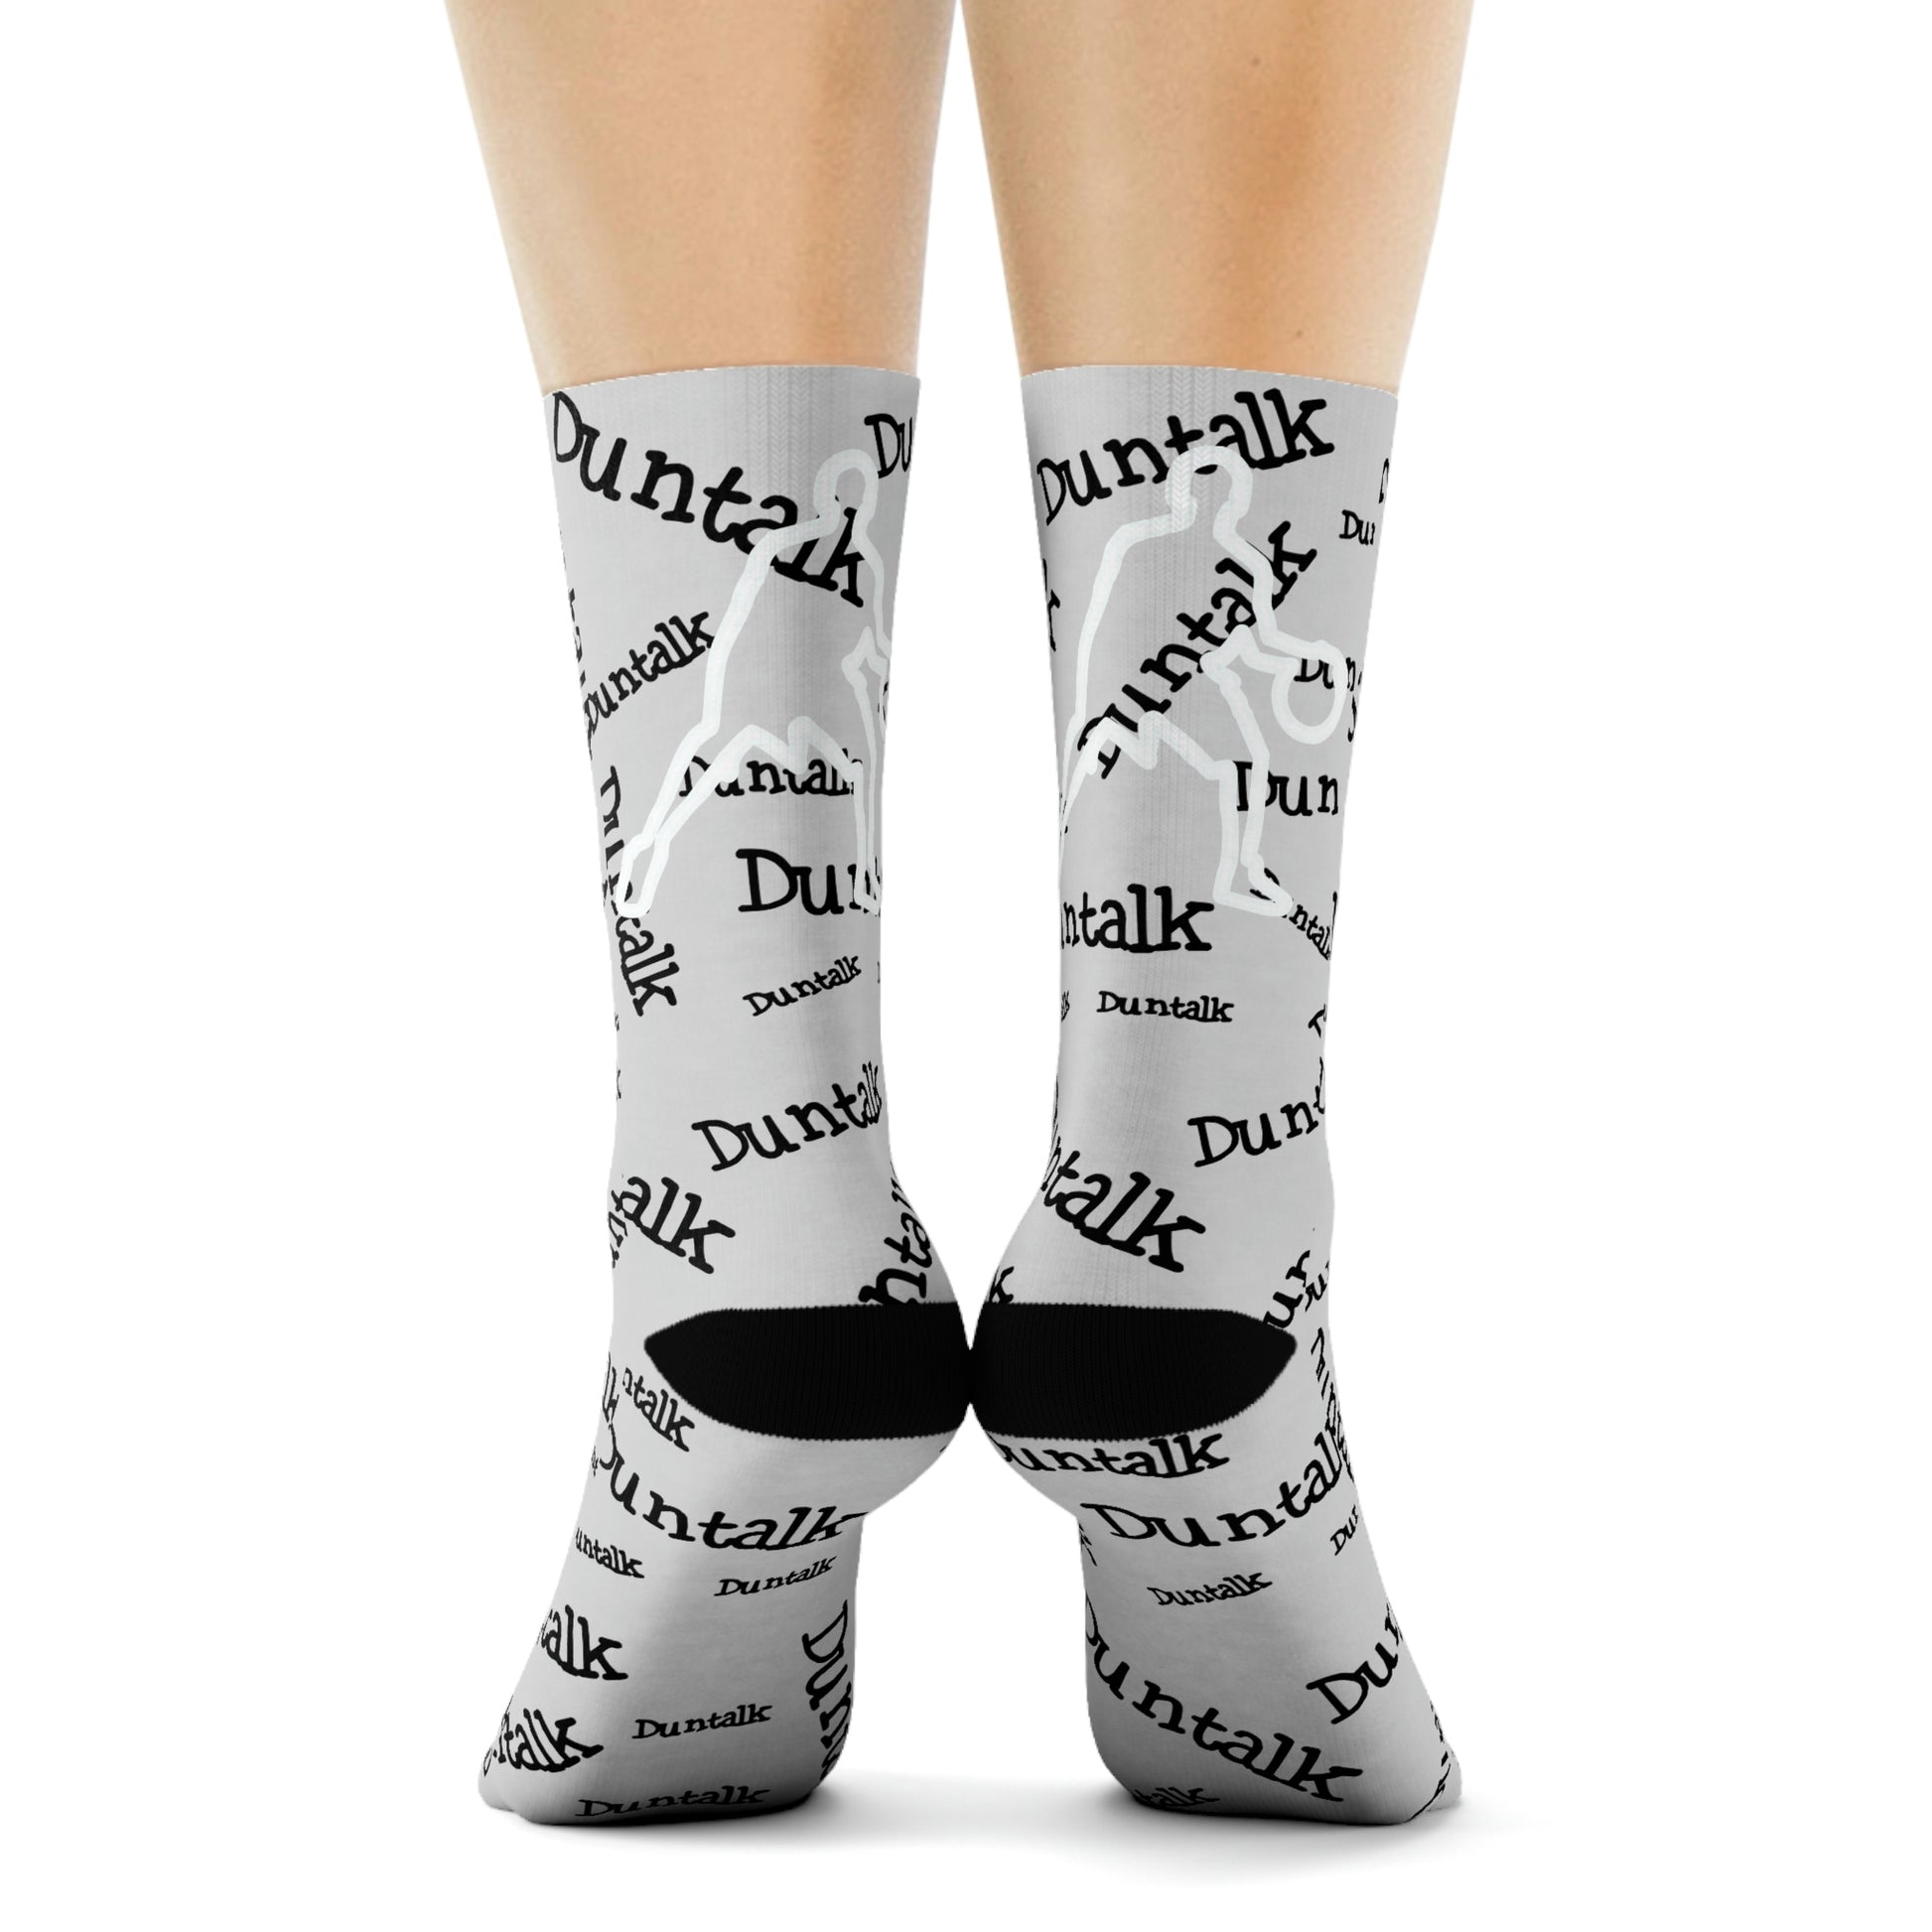 Gray socks with "Duntalk" print written in black with white outline basketball figure on the back of each sock.